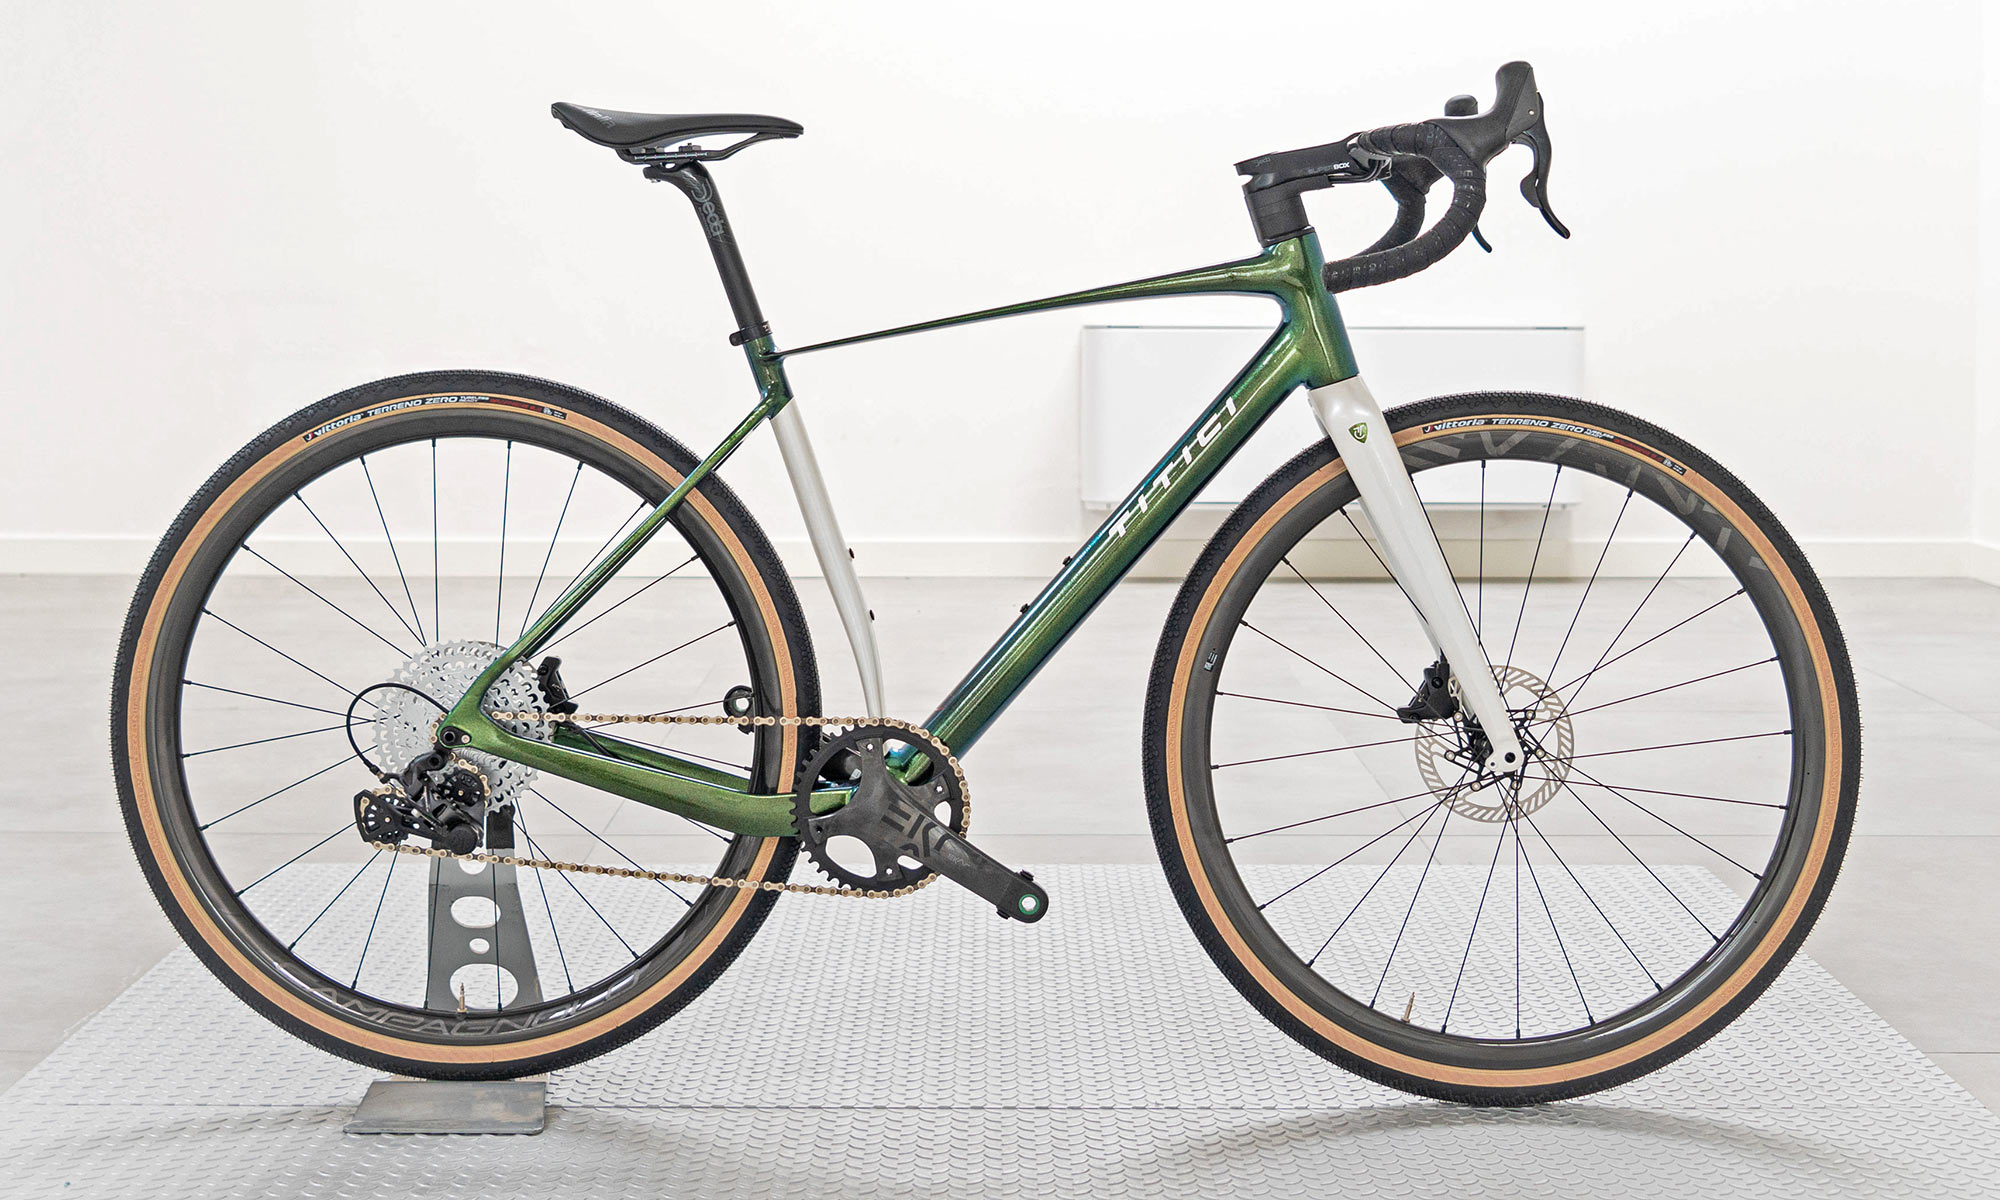 Titici Relli carbon gravel bike, Flexy PAT AAT vibration-damping engineered comfort flex, photo by Mattia Ragni, complete